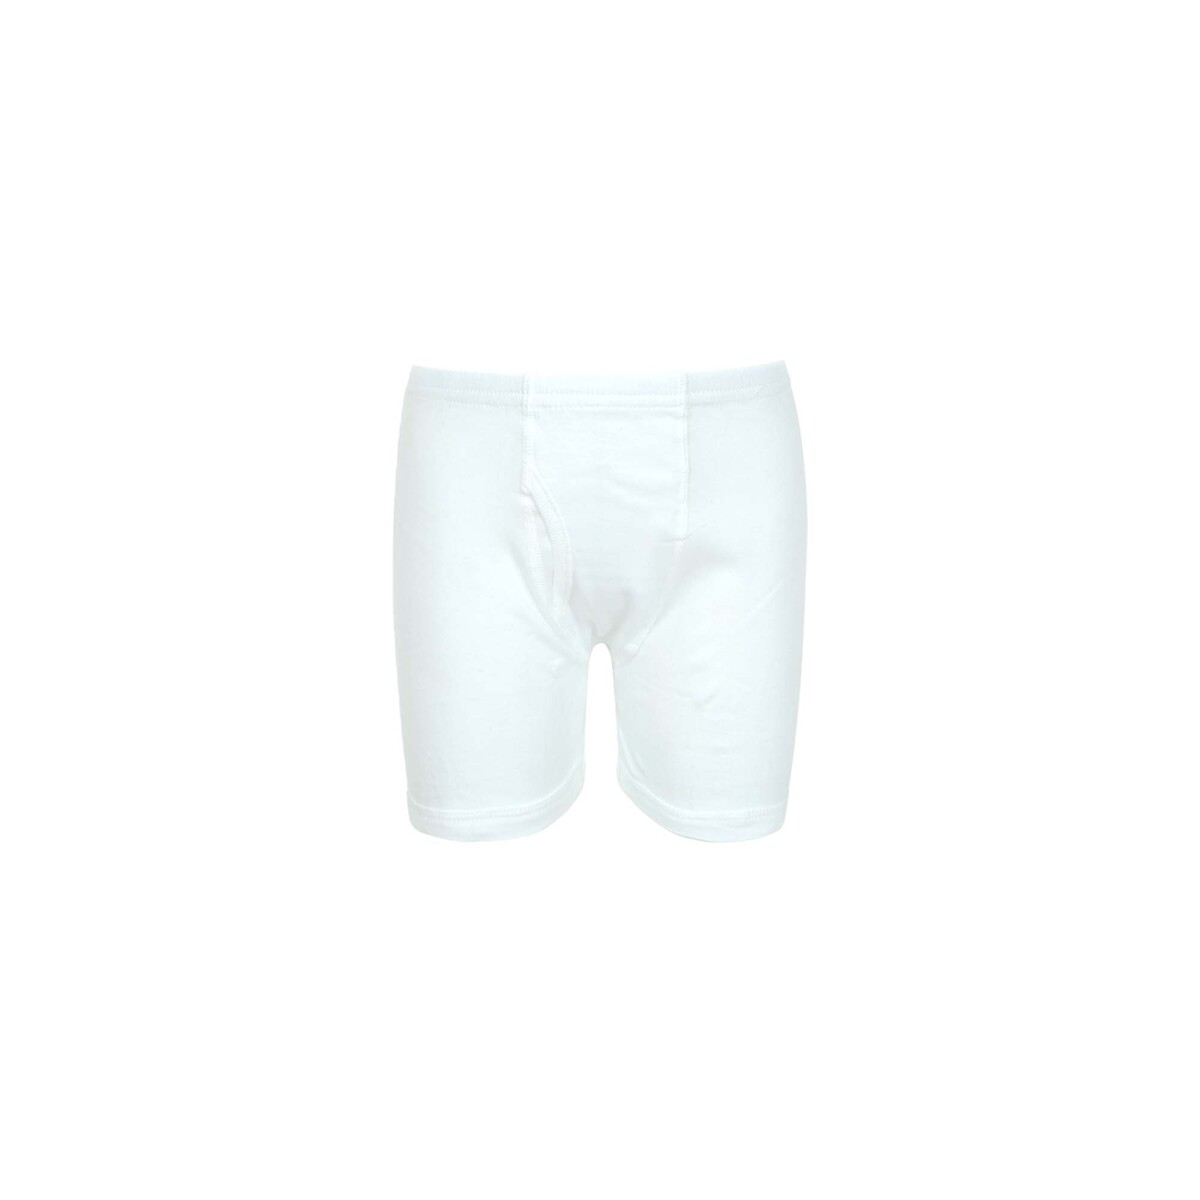 Elite Comfort Boys Under Shorts White 3Pcs Pack 5-6 Y